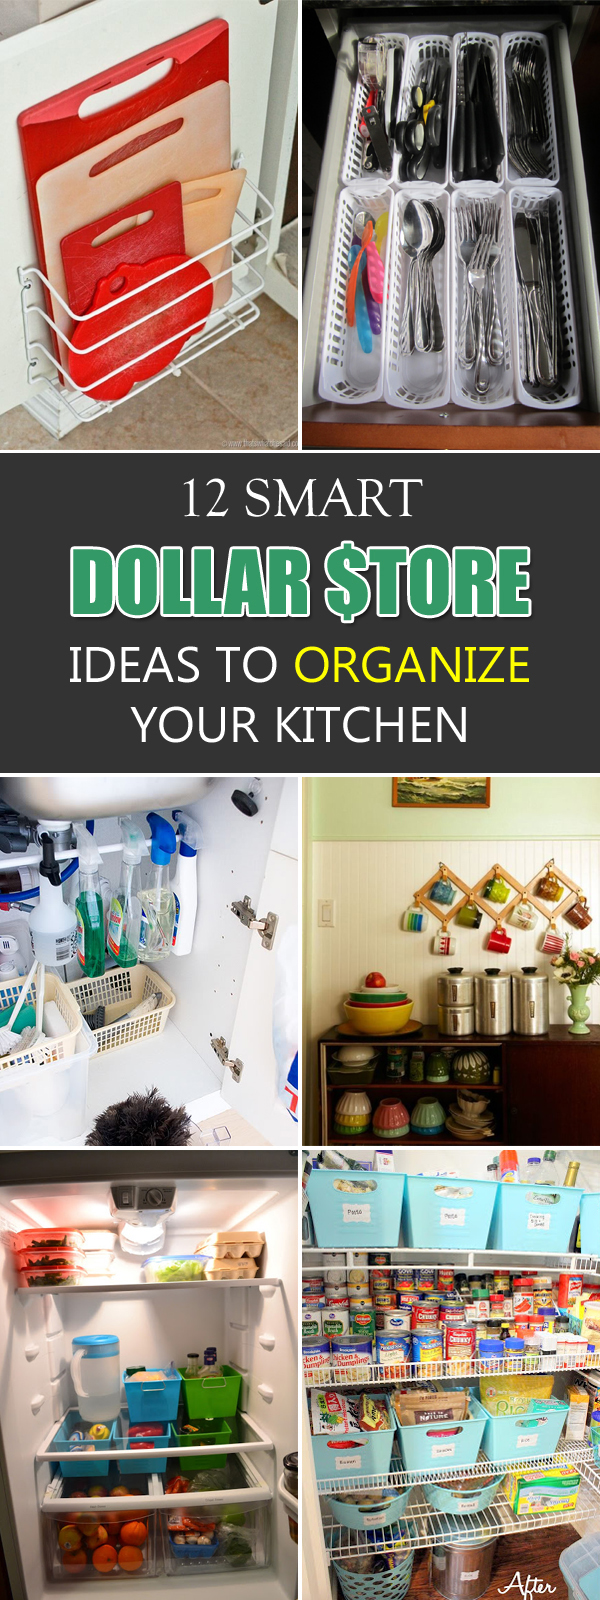 12 Smart Dollar Store Ideas To Organize Your Kitchen